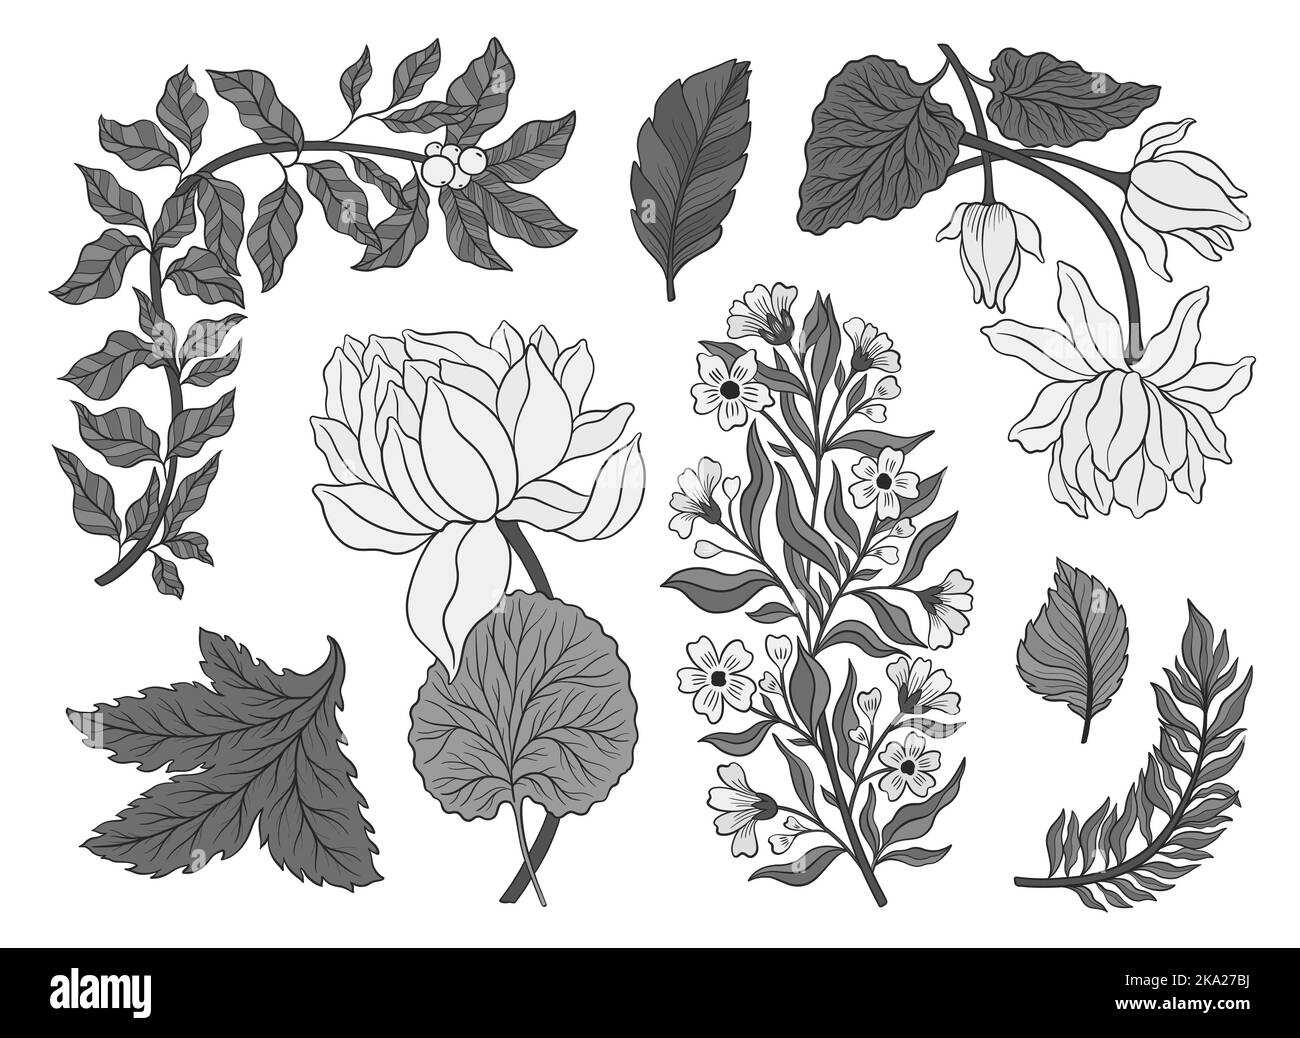 Collection flower outline hand drawn style. Asian national symbol lotus plant. Vintage sketch design. Vector illustration. Stock Vector